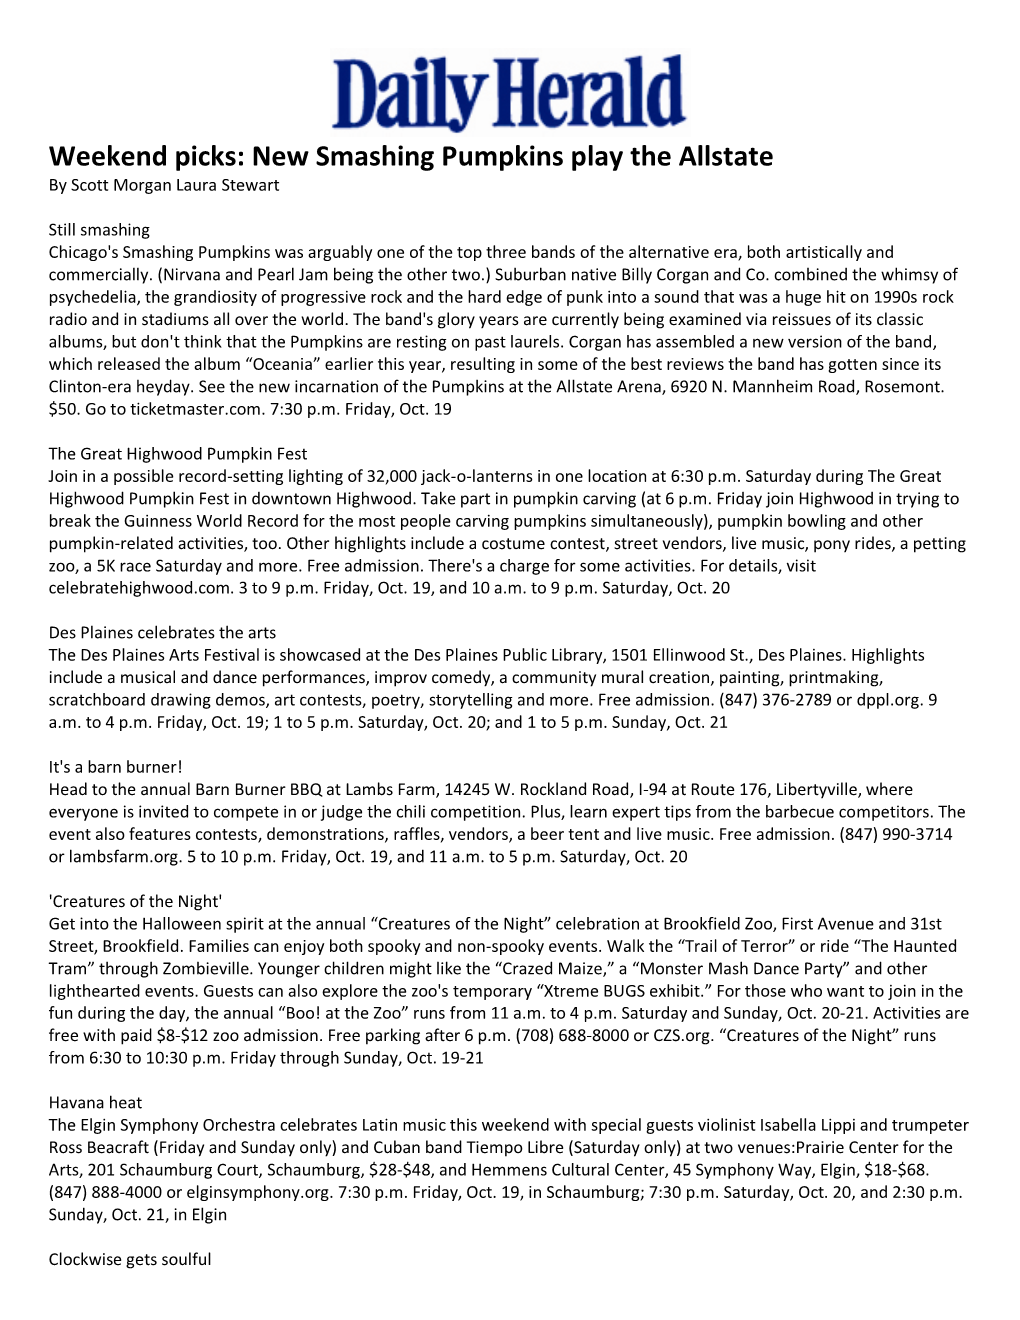 Weekend Picks: New Smashing Pumpkins Play the Allstate by Scott Morgan Laura Stewart